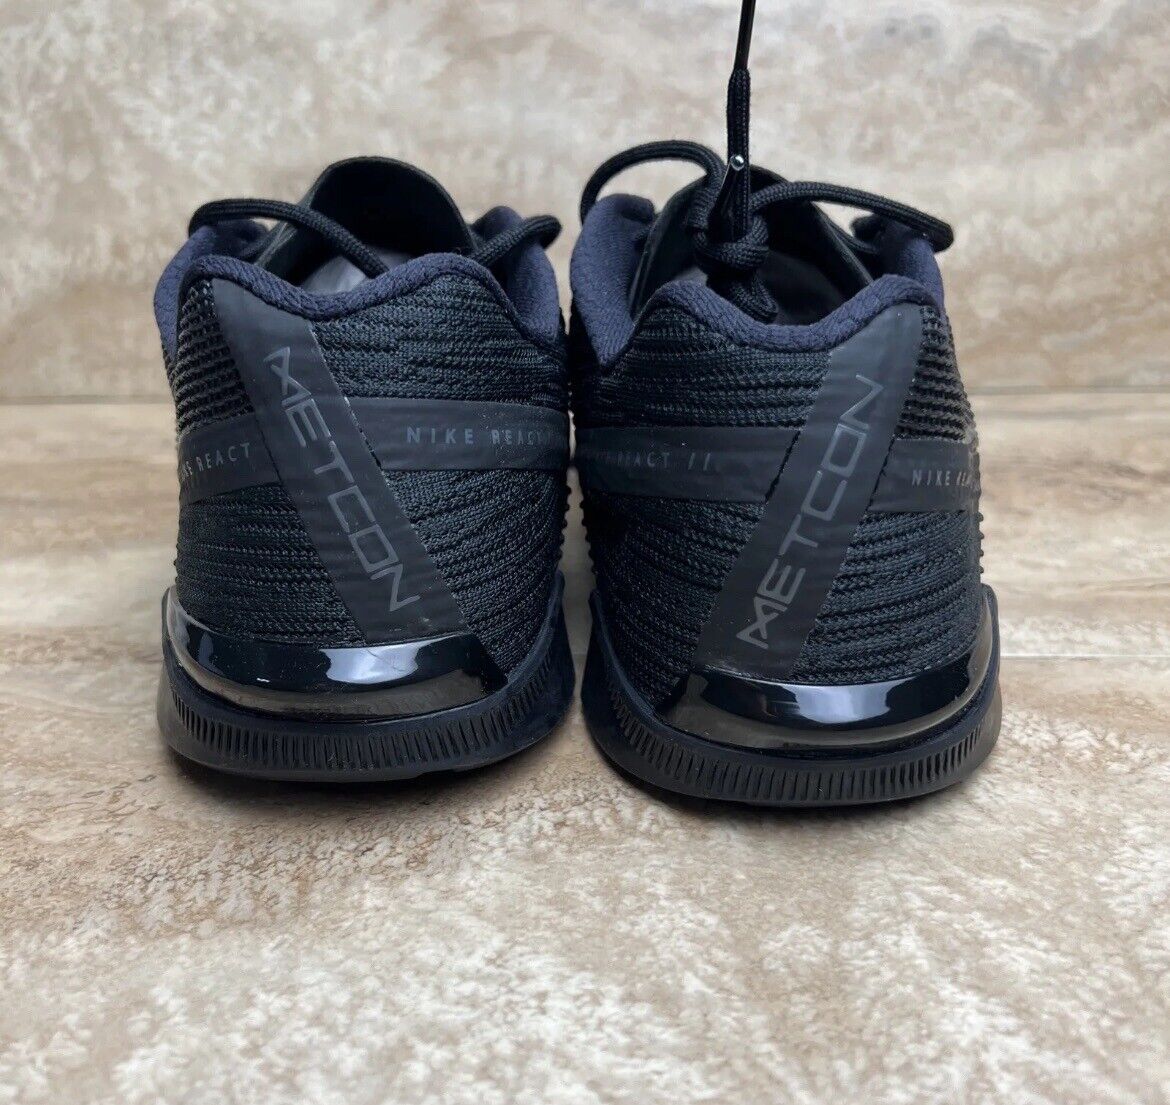 Nike Men's React Metcon Turbo Sneakers Triple Black Cross-fit Training Shoes